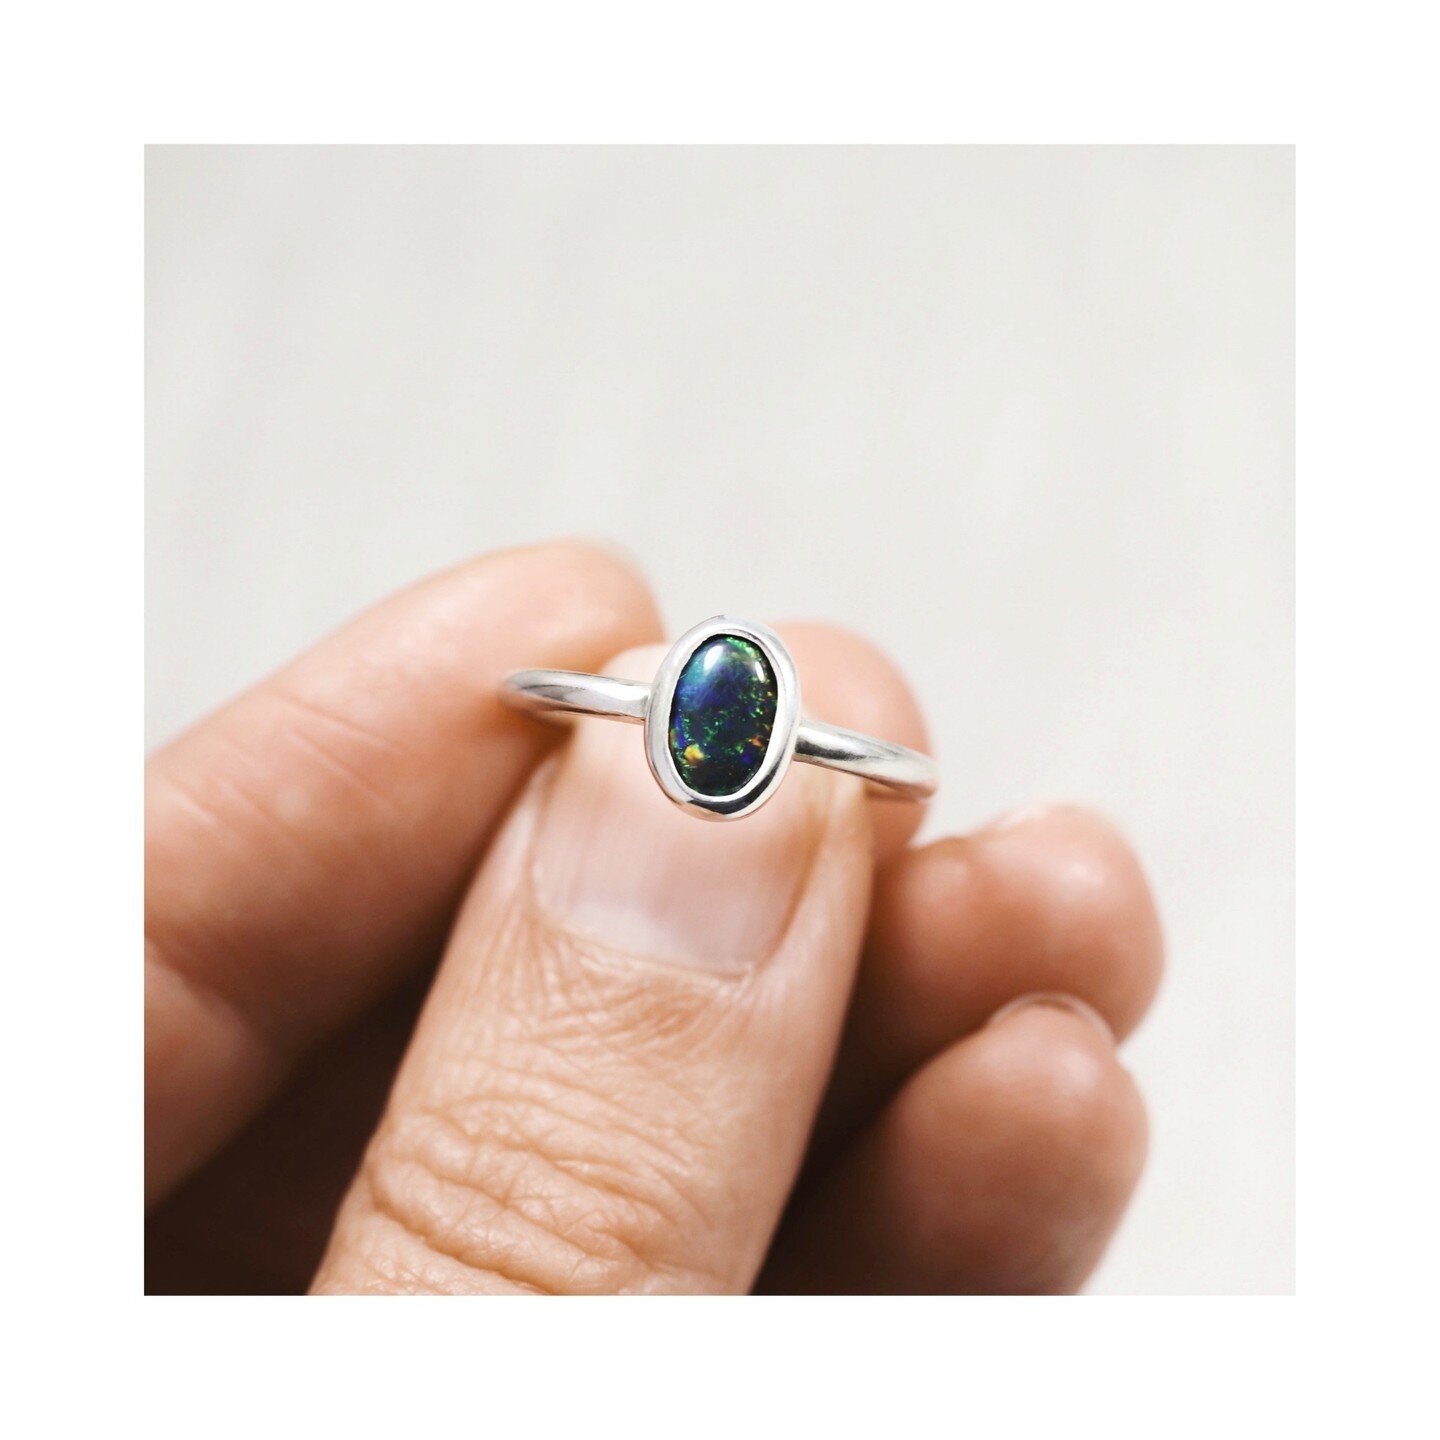 Black aussie opal set in sterling silver 
Now available via our website
Size M 1/2

#blackopal #arborjewellery #sustainablejewellery #blackopalring